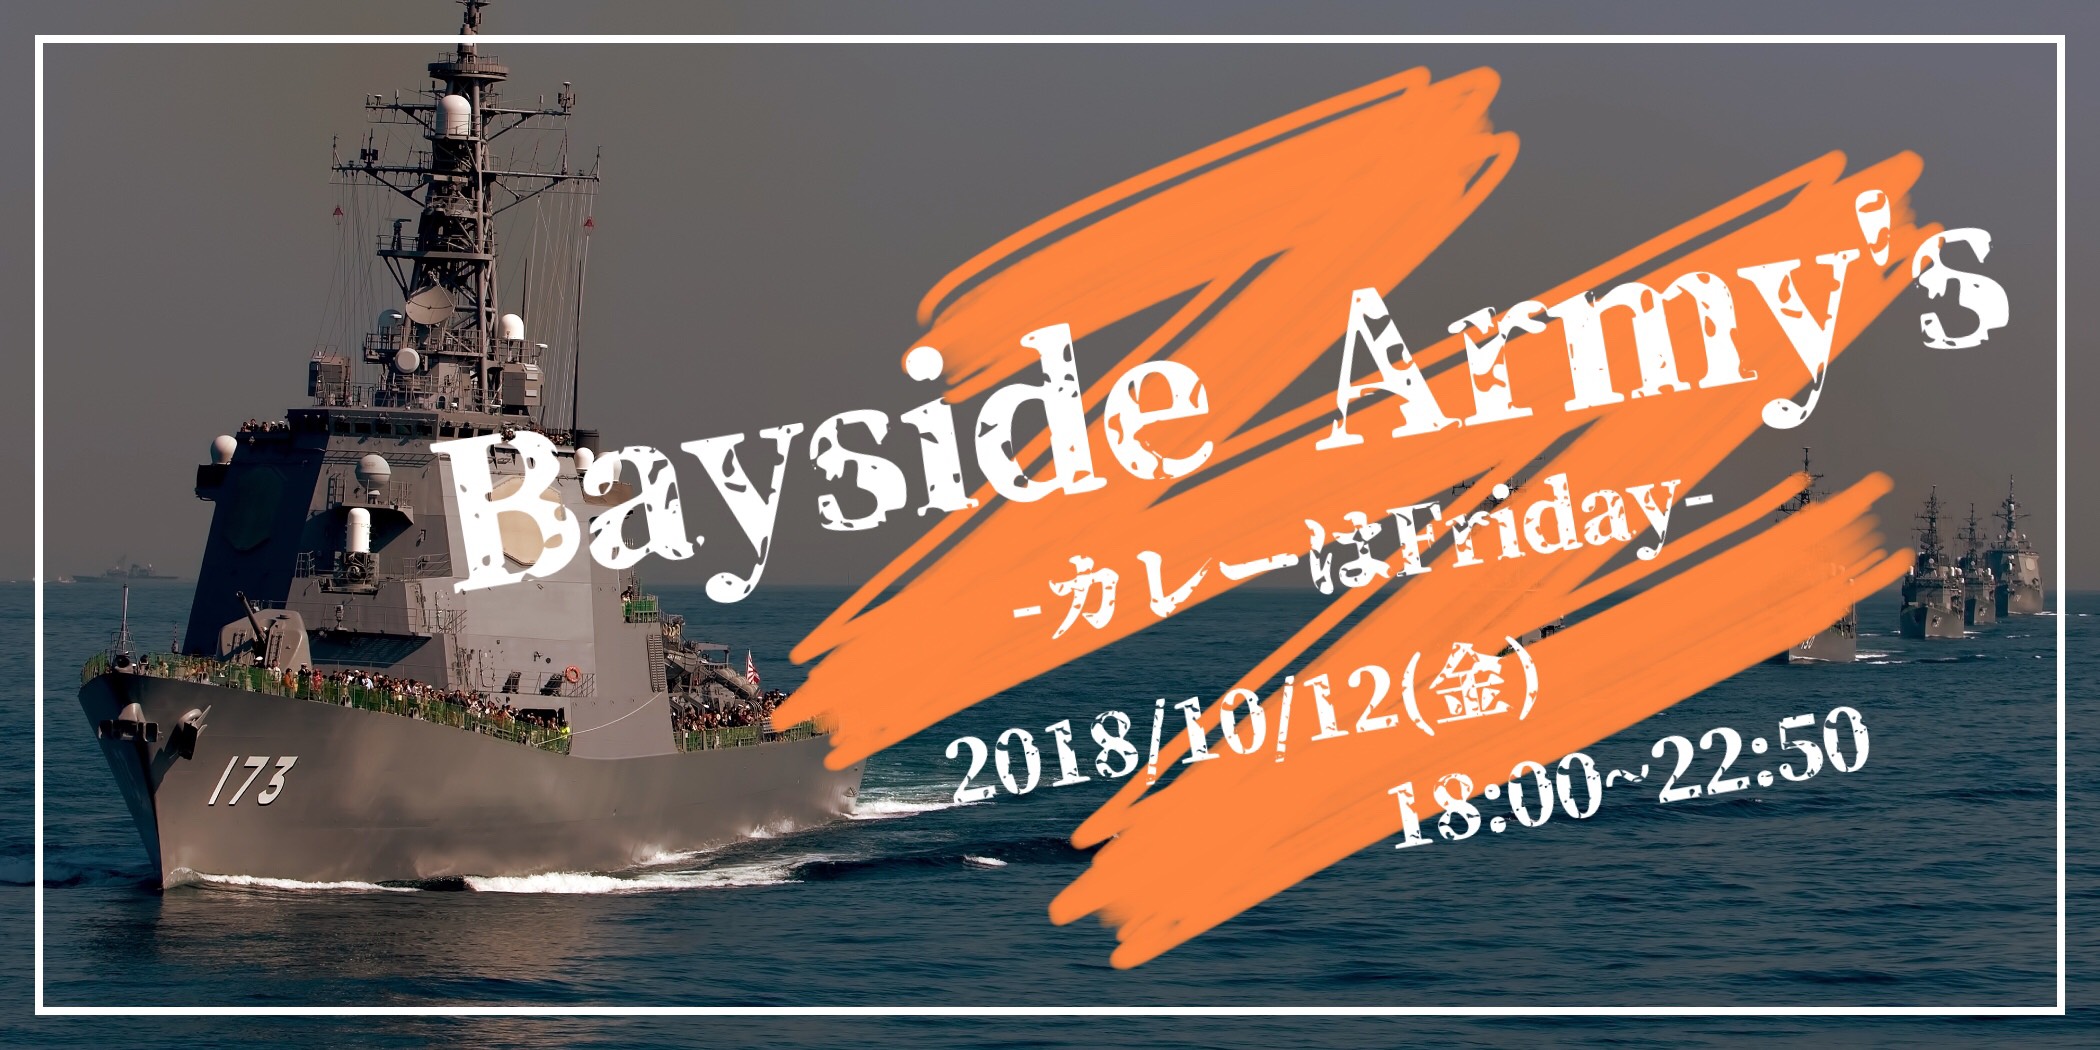 Bayside Army’s